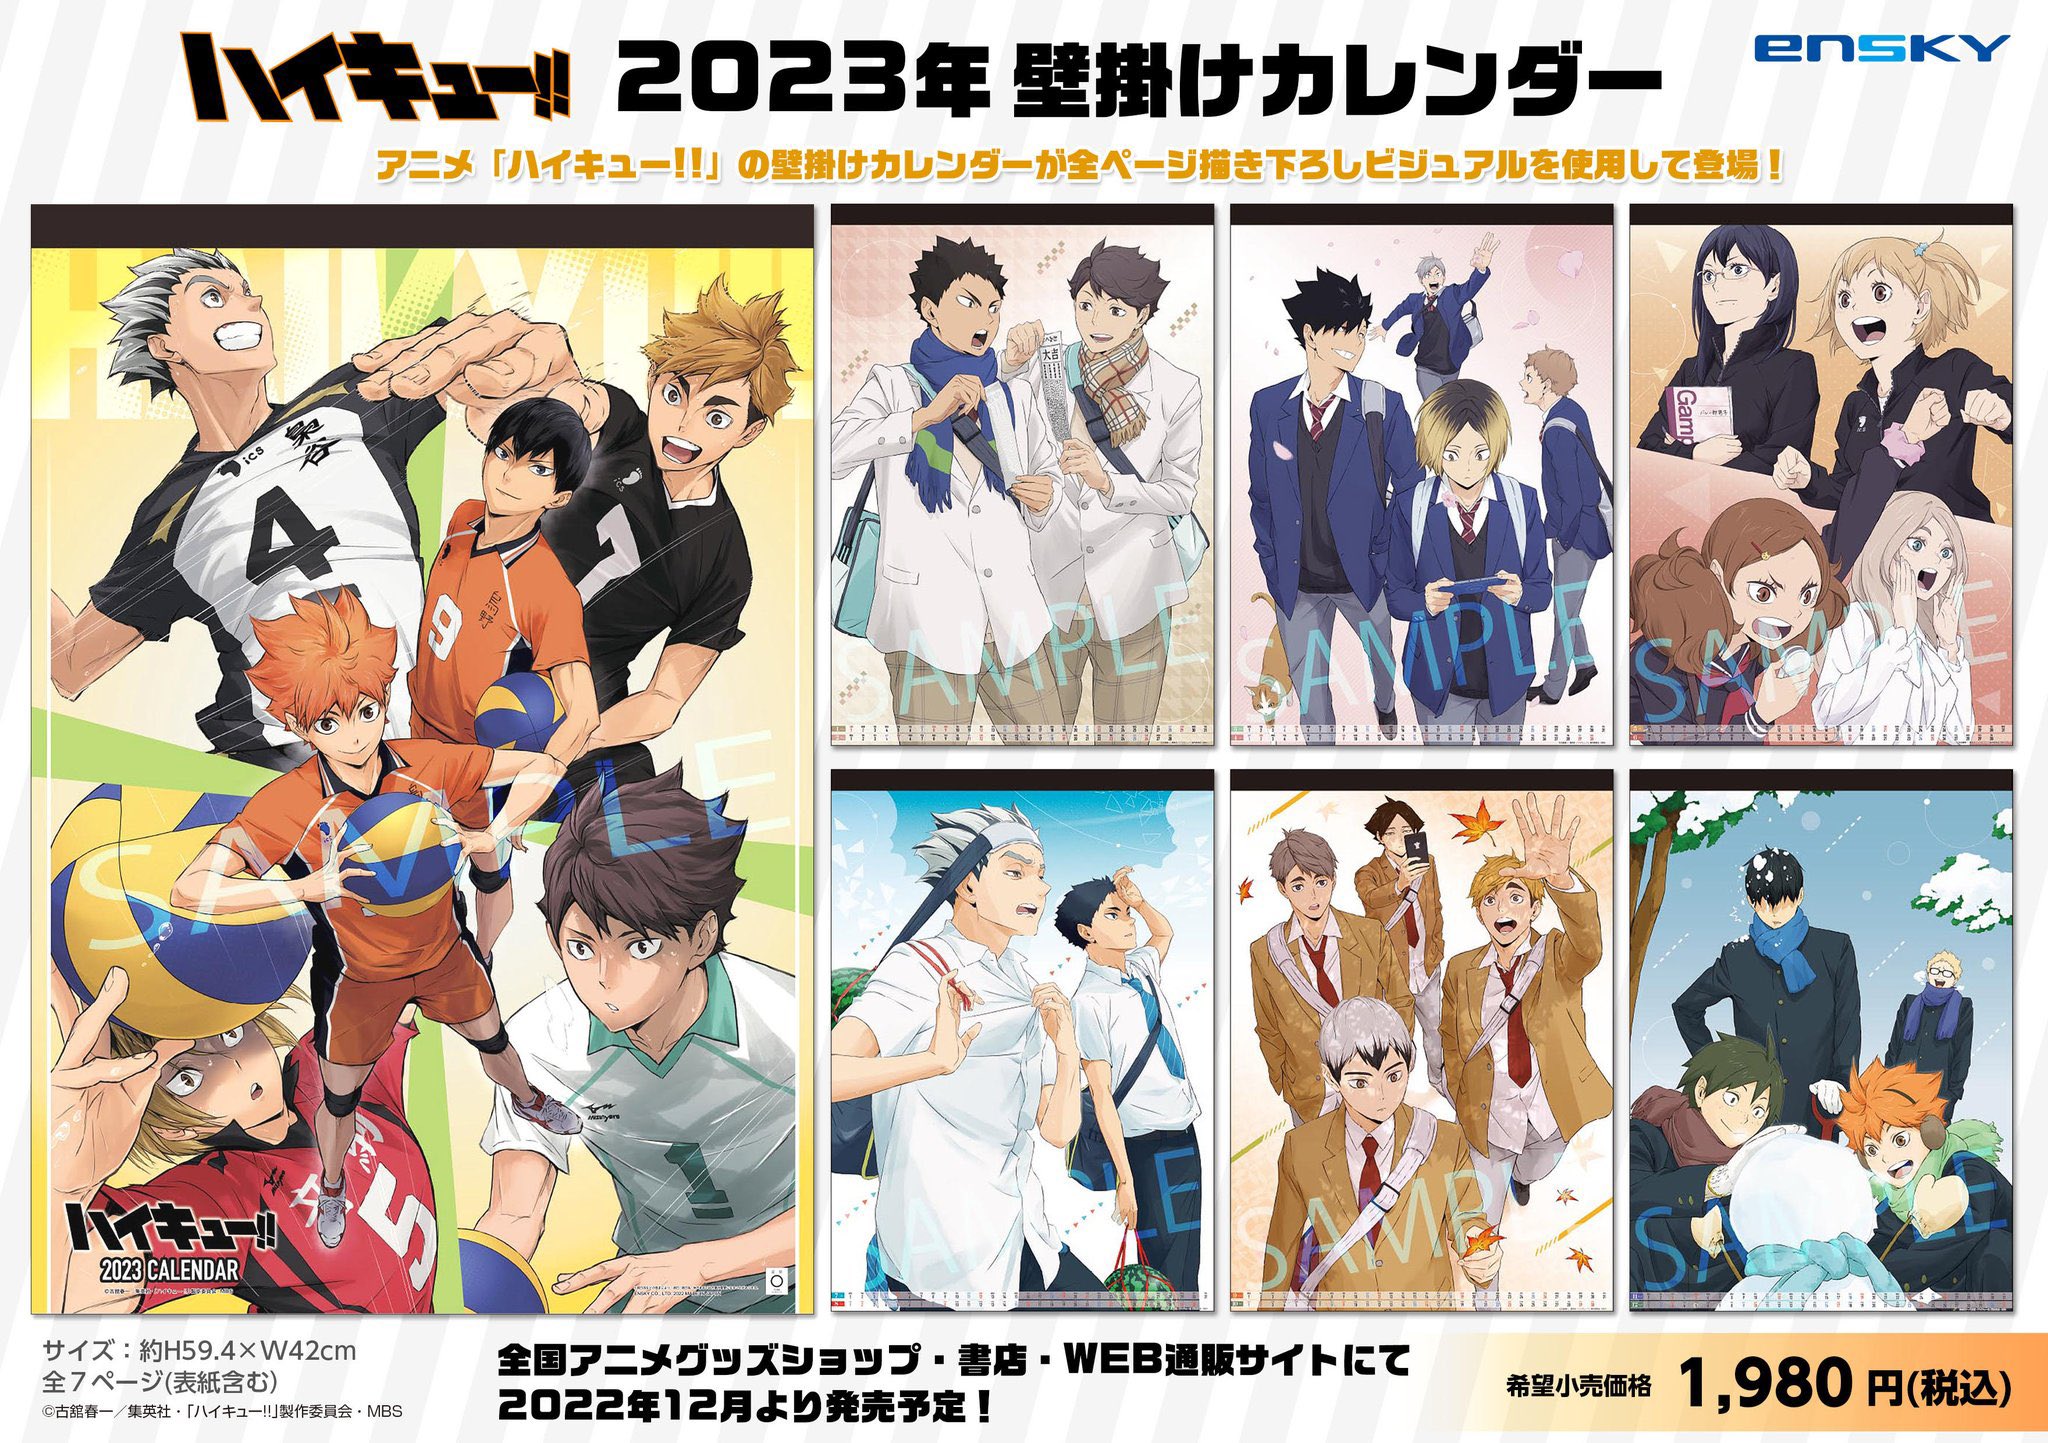 HAIKYU!! on X: TV Anime “Haikyu!!” 2023 Calendar - Includes 7 newly drawn  illustrations Releasing December 2022! #ハイキュー #hq_anime   / X